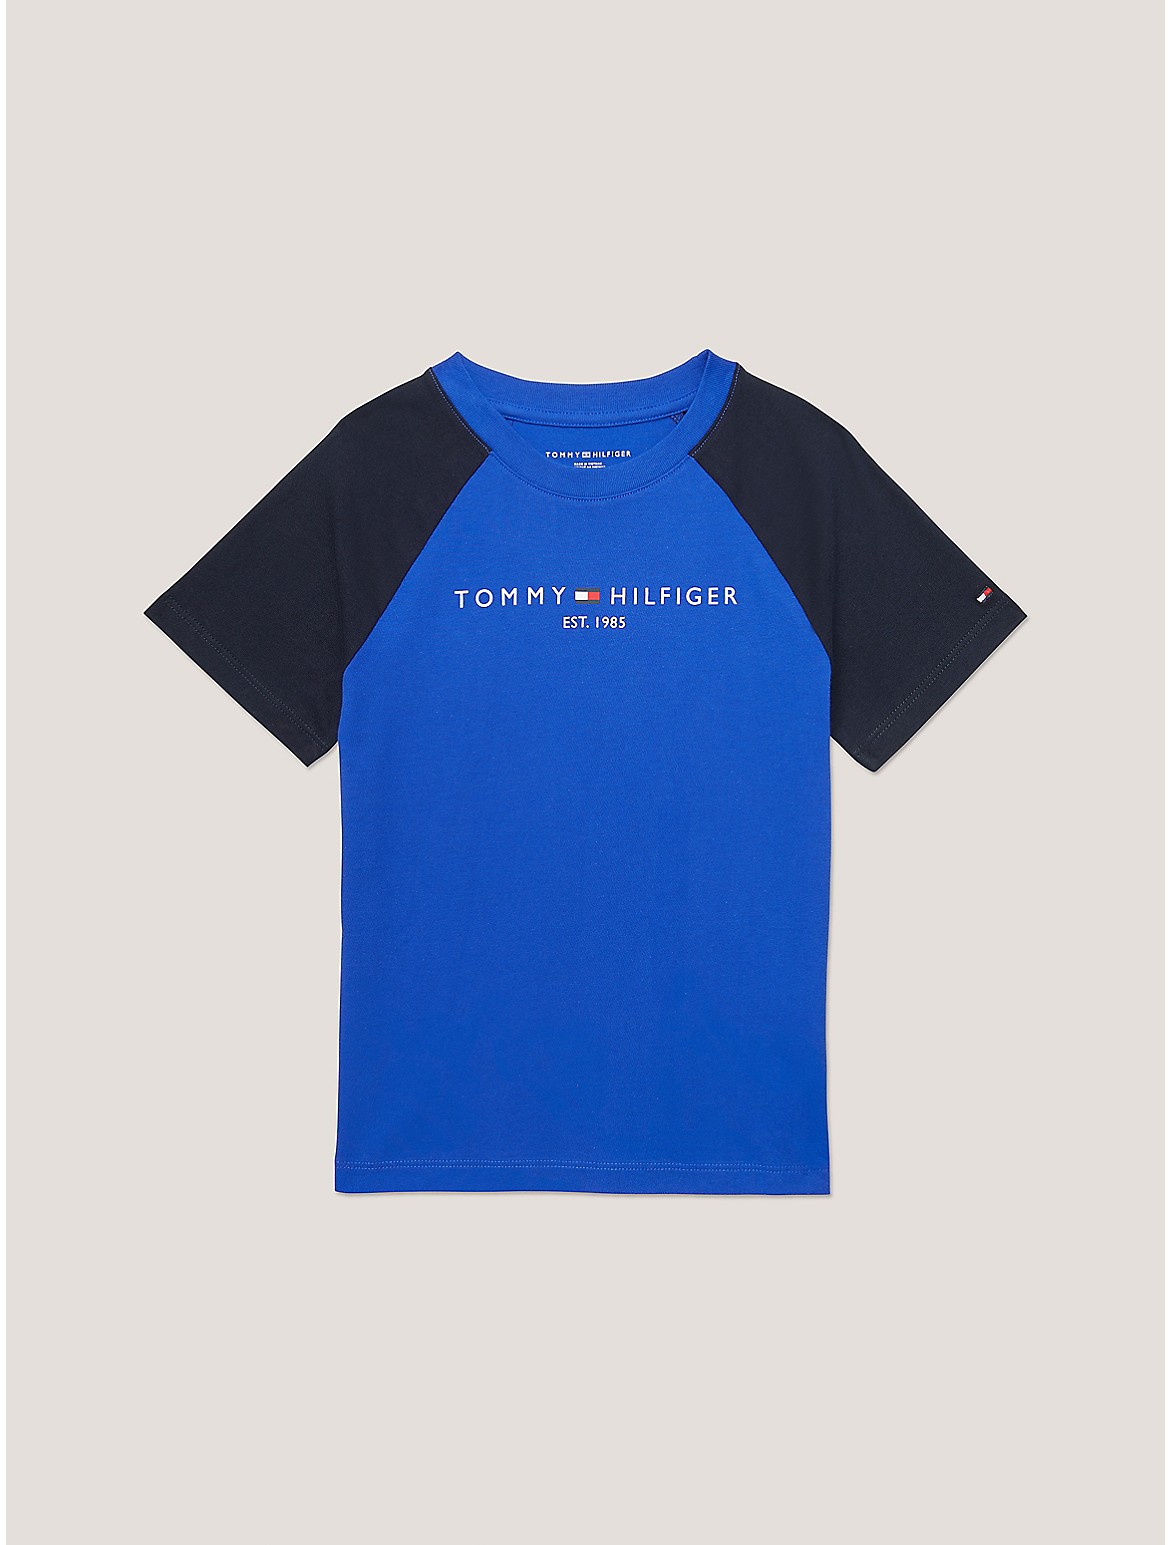 Tommy Hilfiger Boys' Kids' Baseball T-Shirt - Blue - XXS